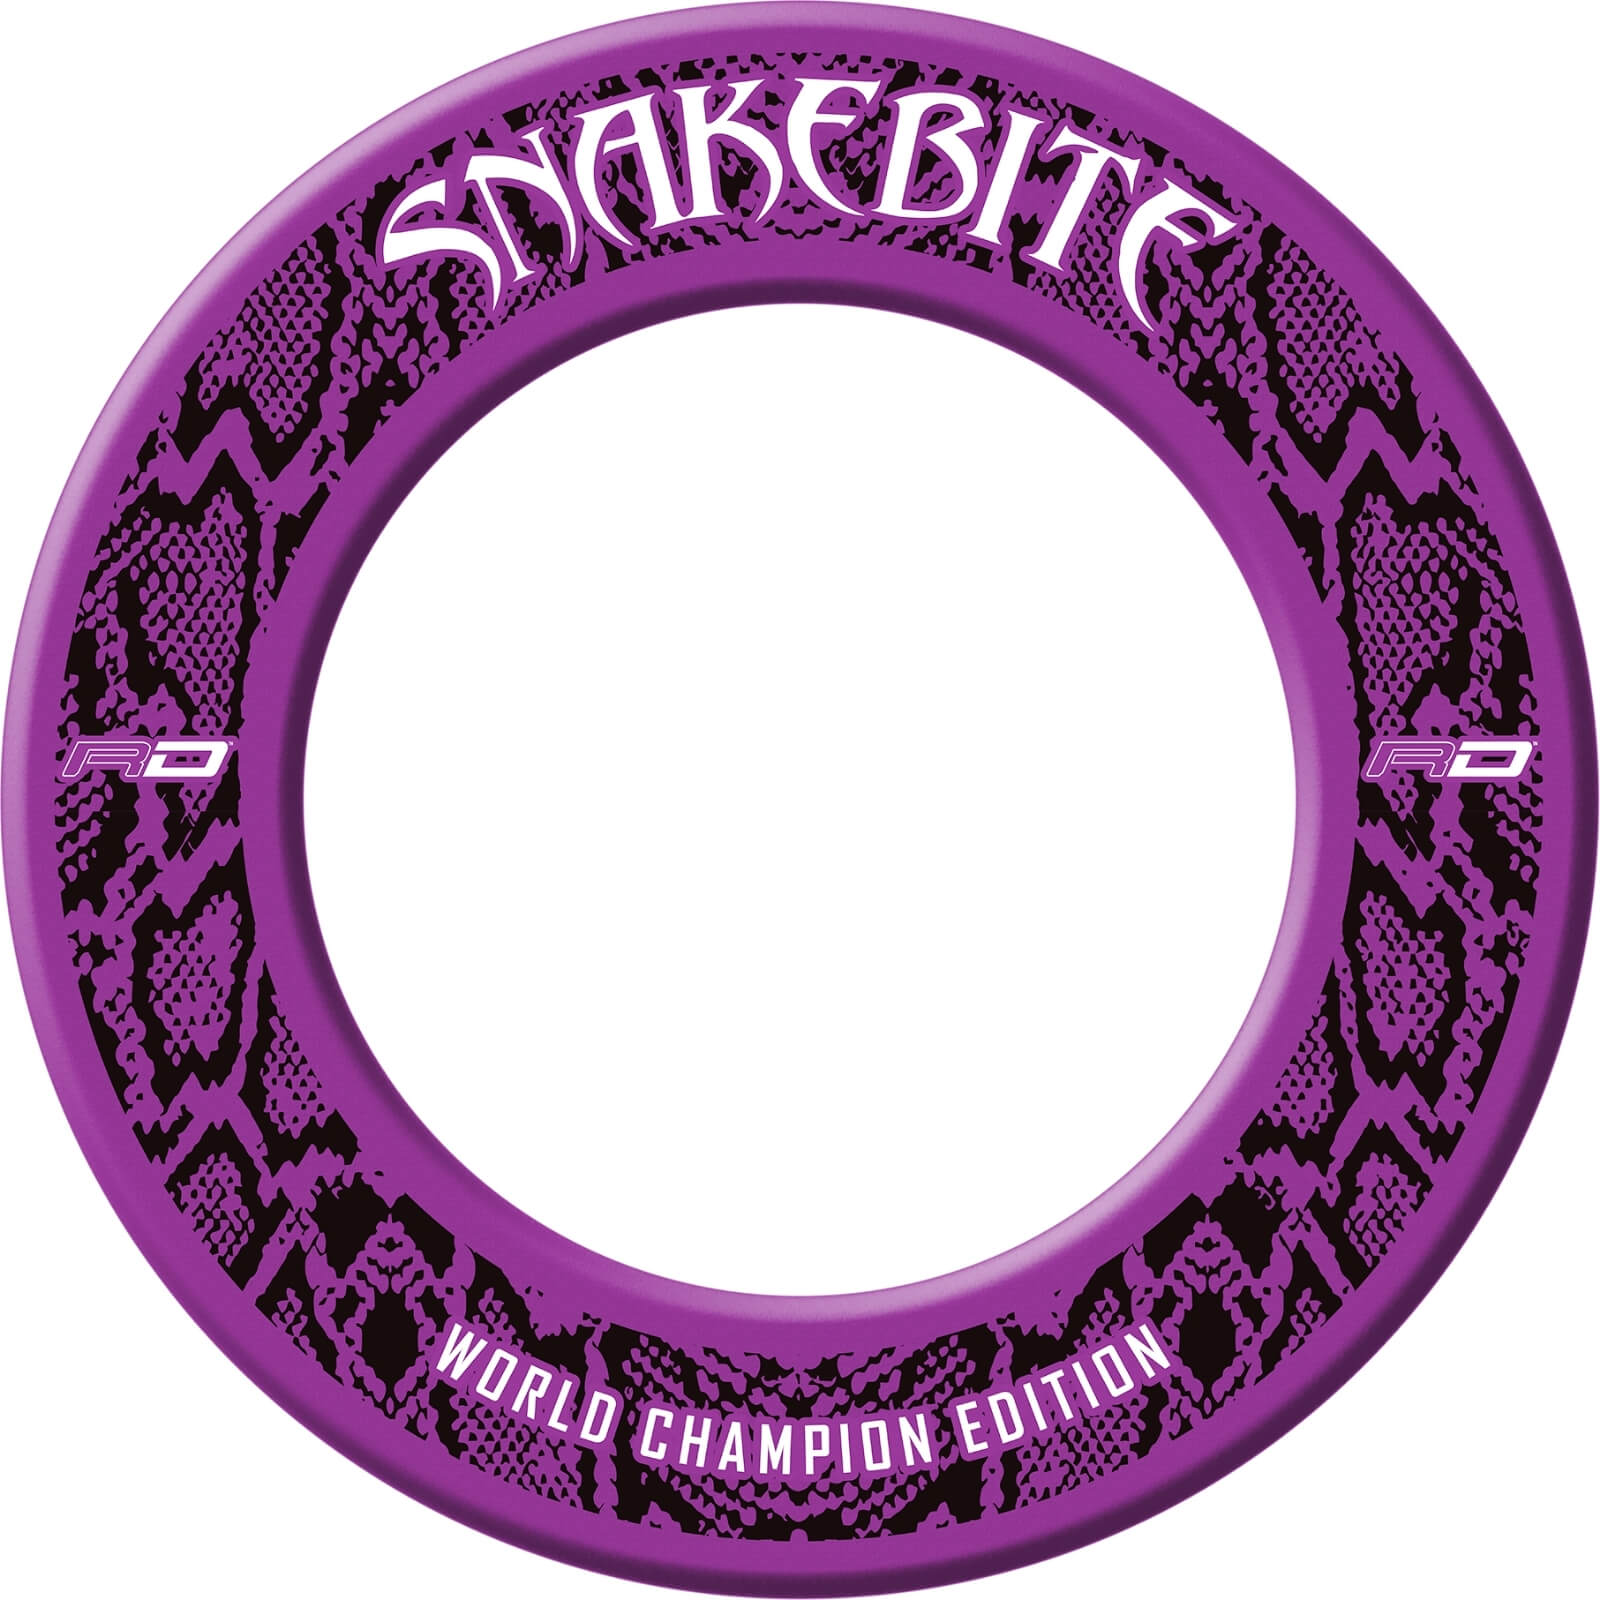 Dartboard Accessories - Red Dragon - Snakebite World Champion Edition Dartboard Surround 